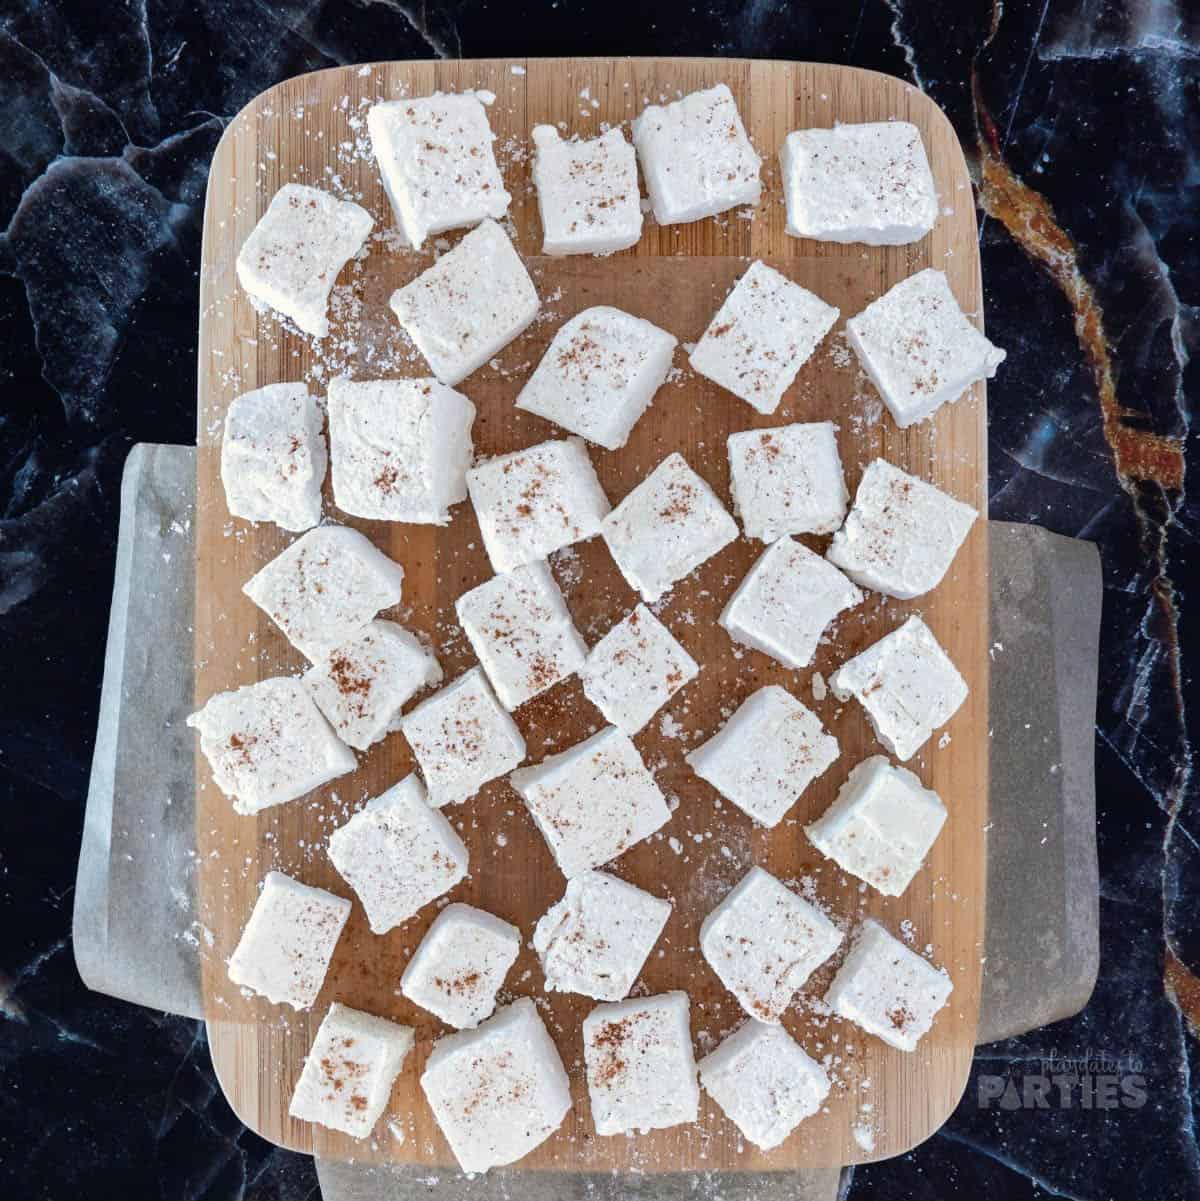 Homemade marshmallows on a cutting board.